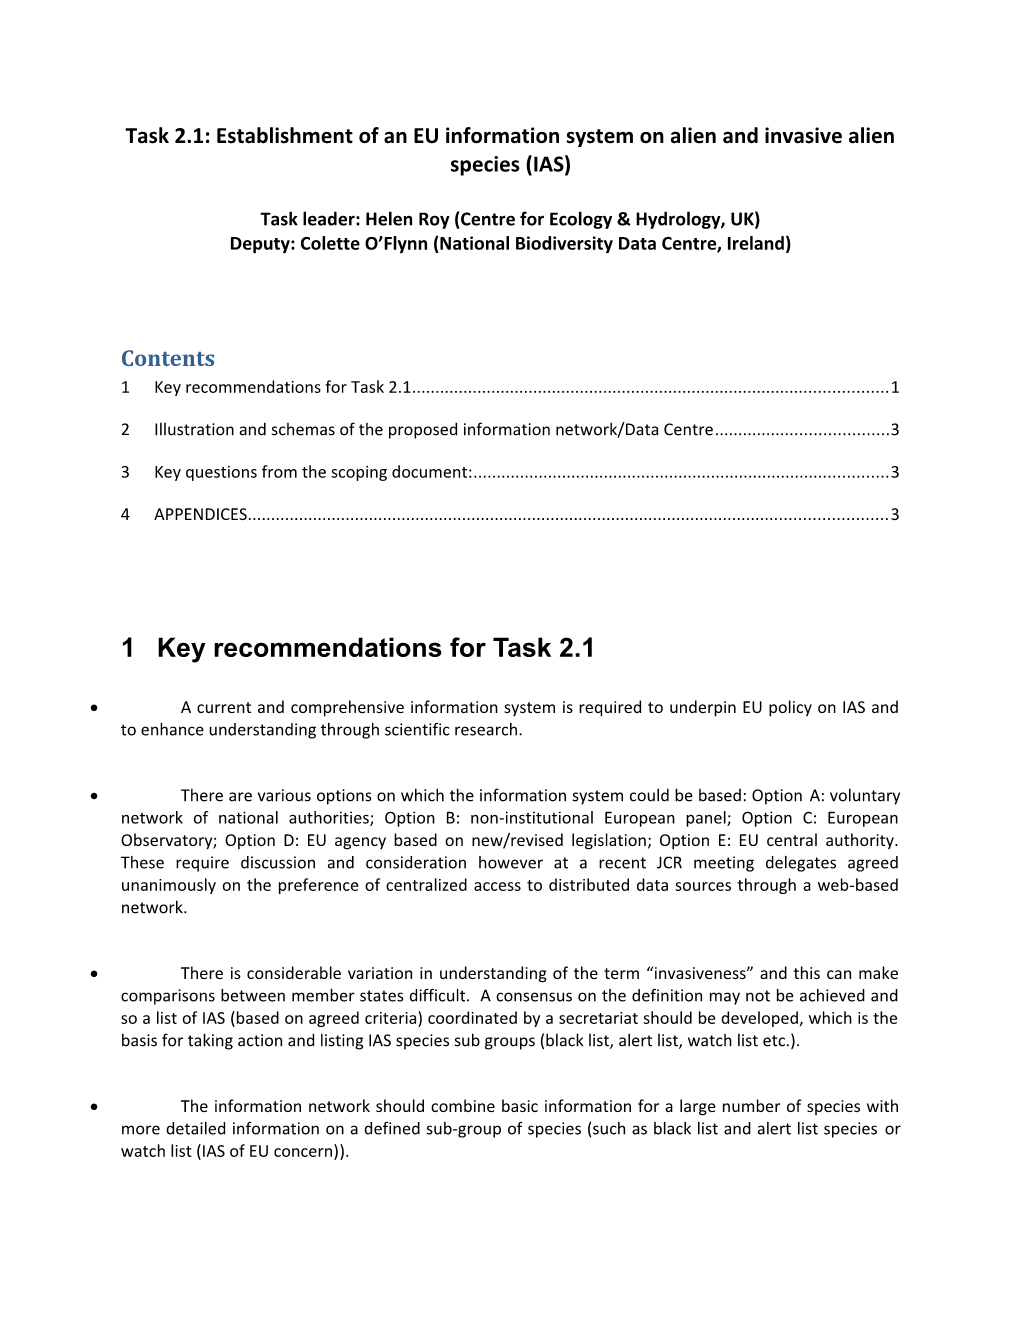 Task 2.1: Establishment of an EU Information System on Alien and Invasive Alien Species (IAS)